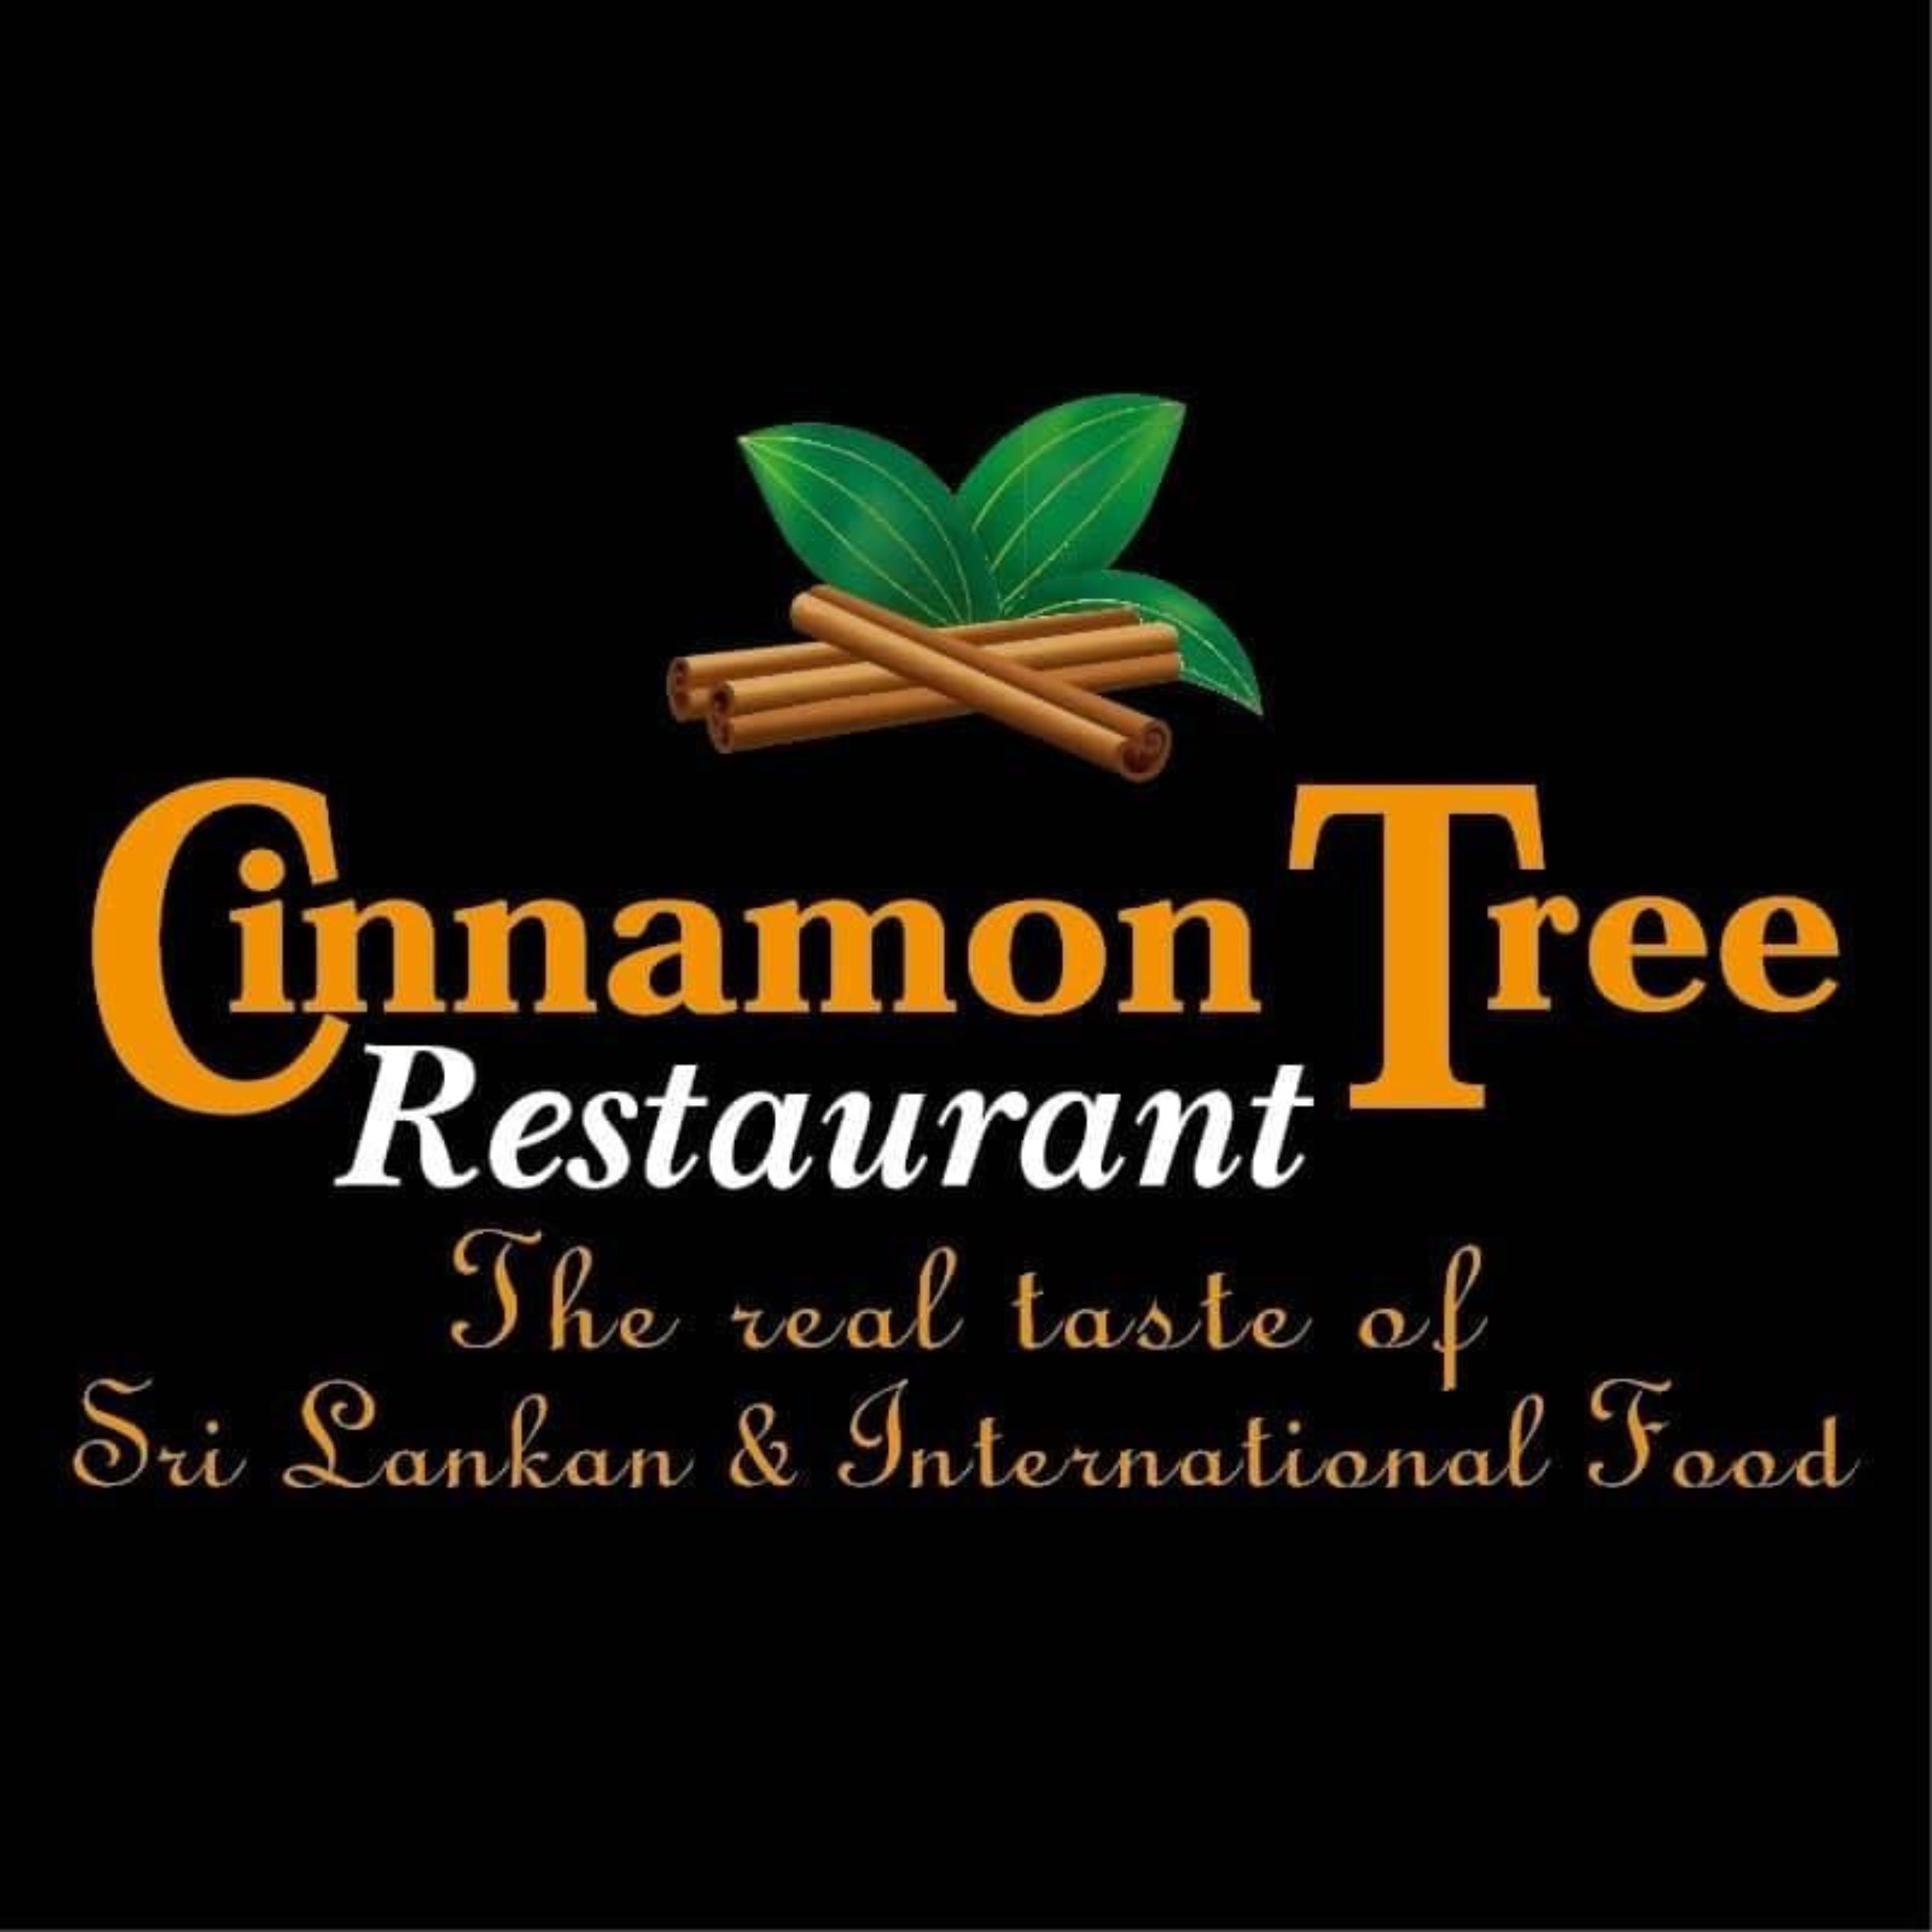 Cinnamon Tree Restaurant